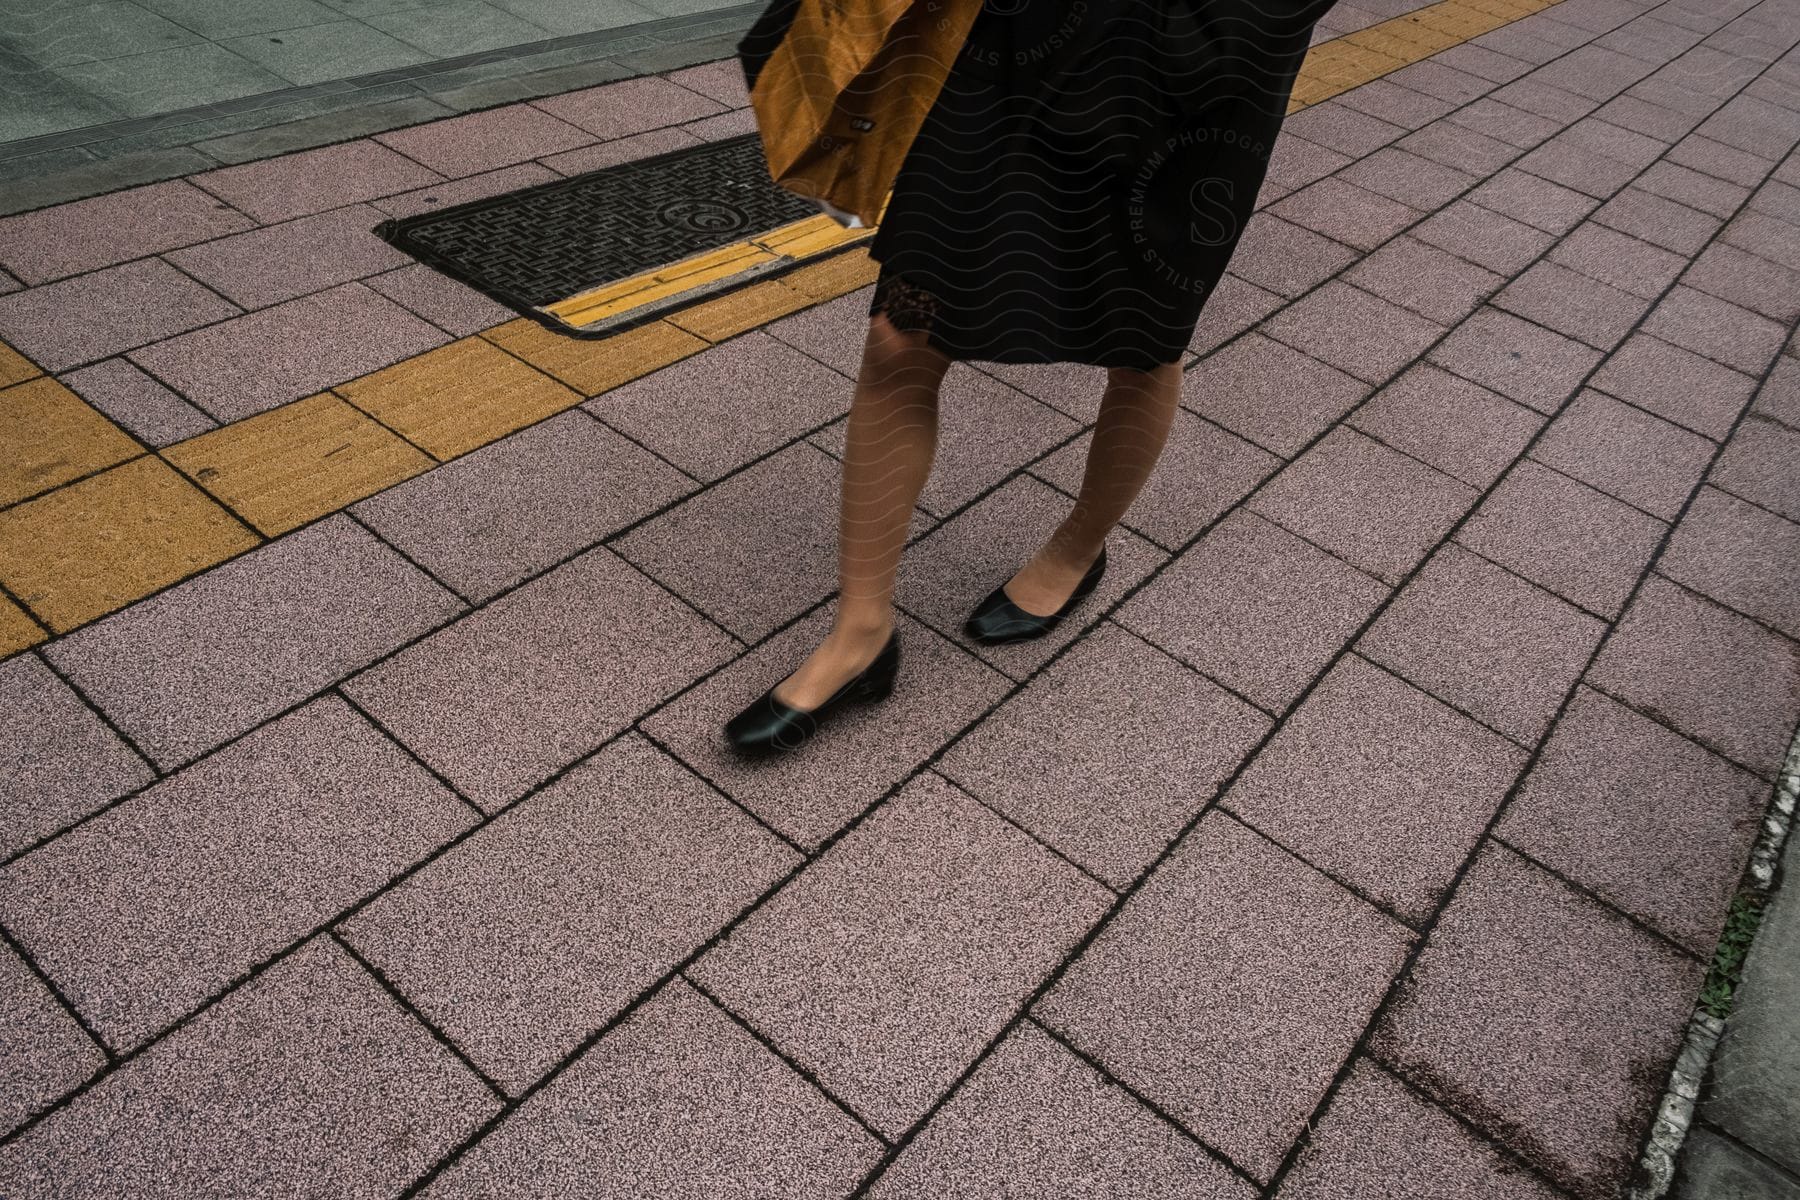 A woman in black flat shoes walks on the concrete city sidewalk